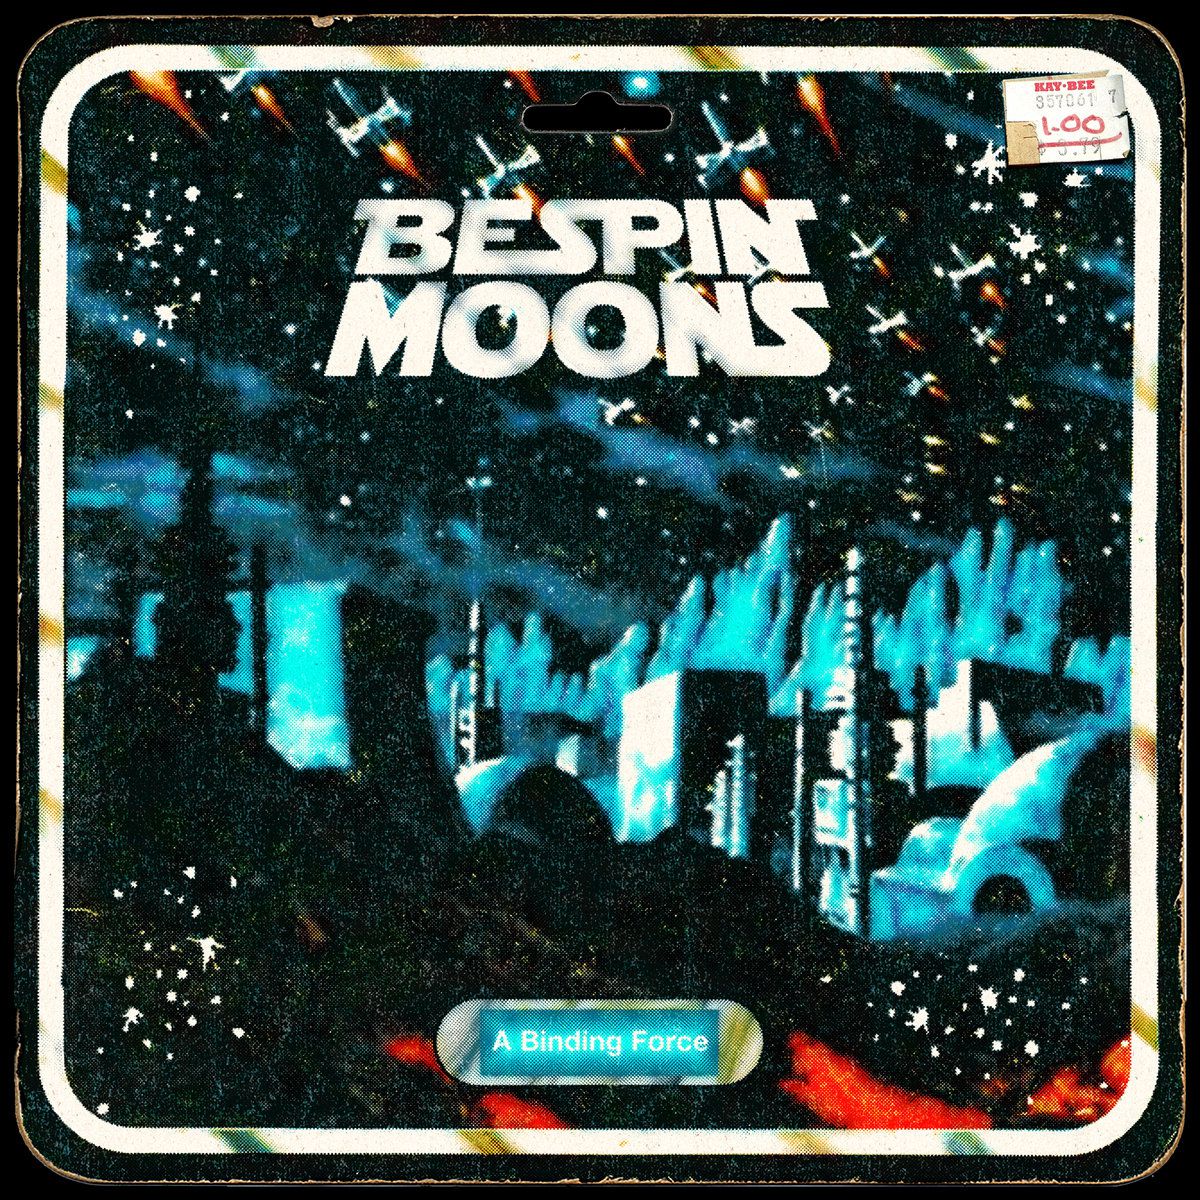 Album associé à la Obi Owl Kenobi par Uiltje. Bespin Moons - A Binding Force